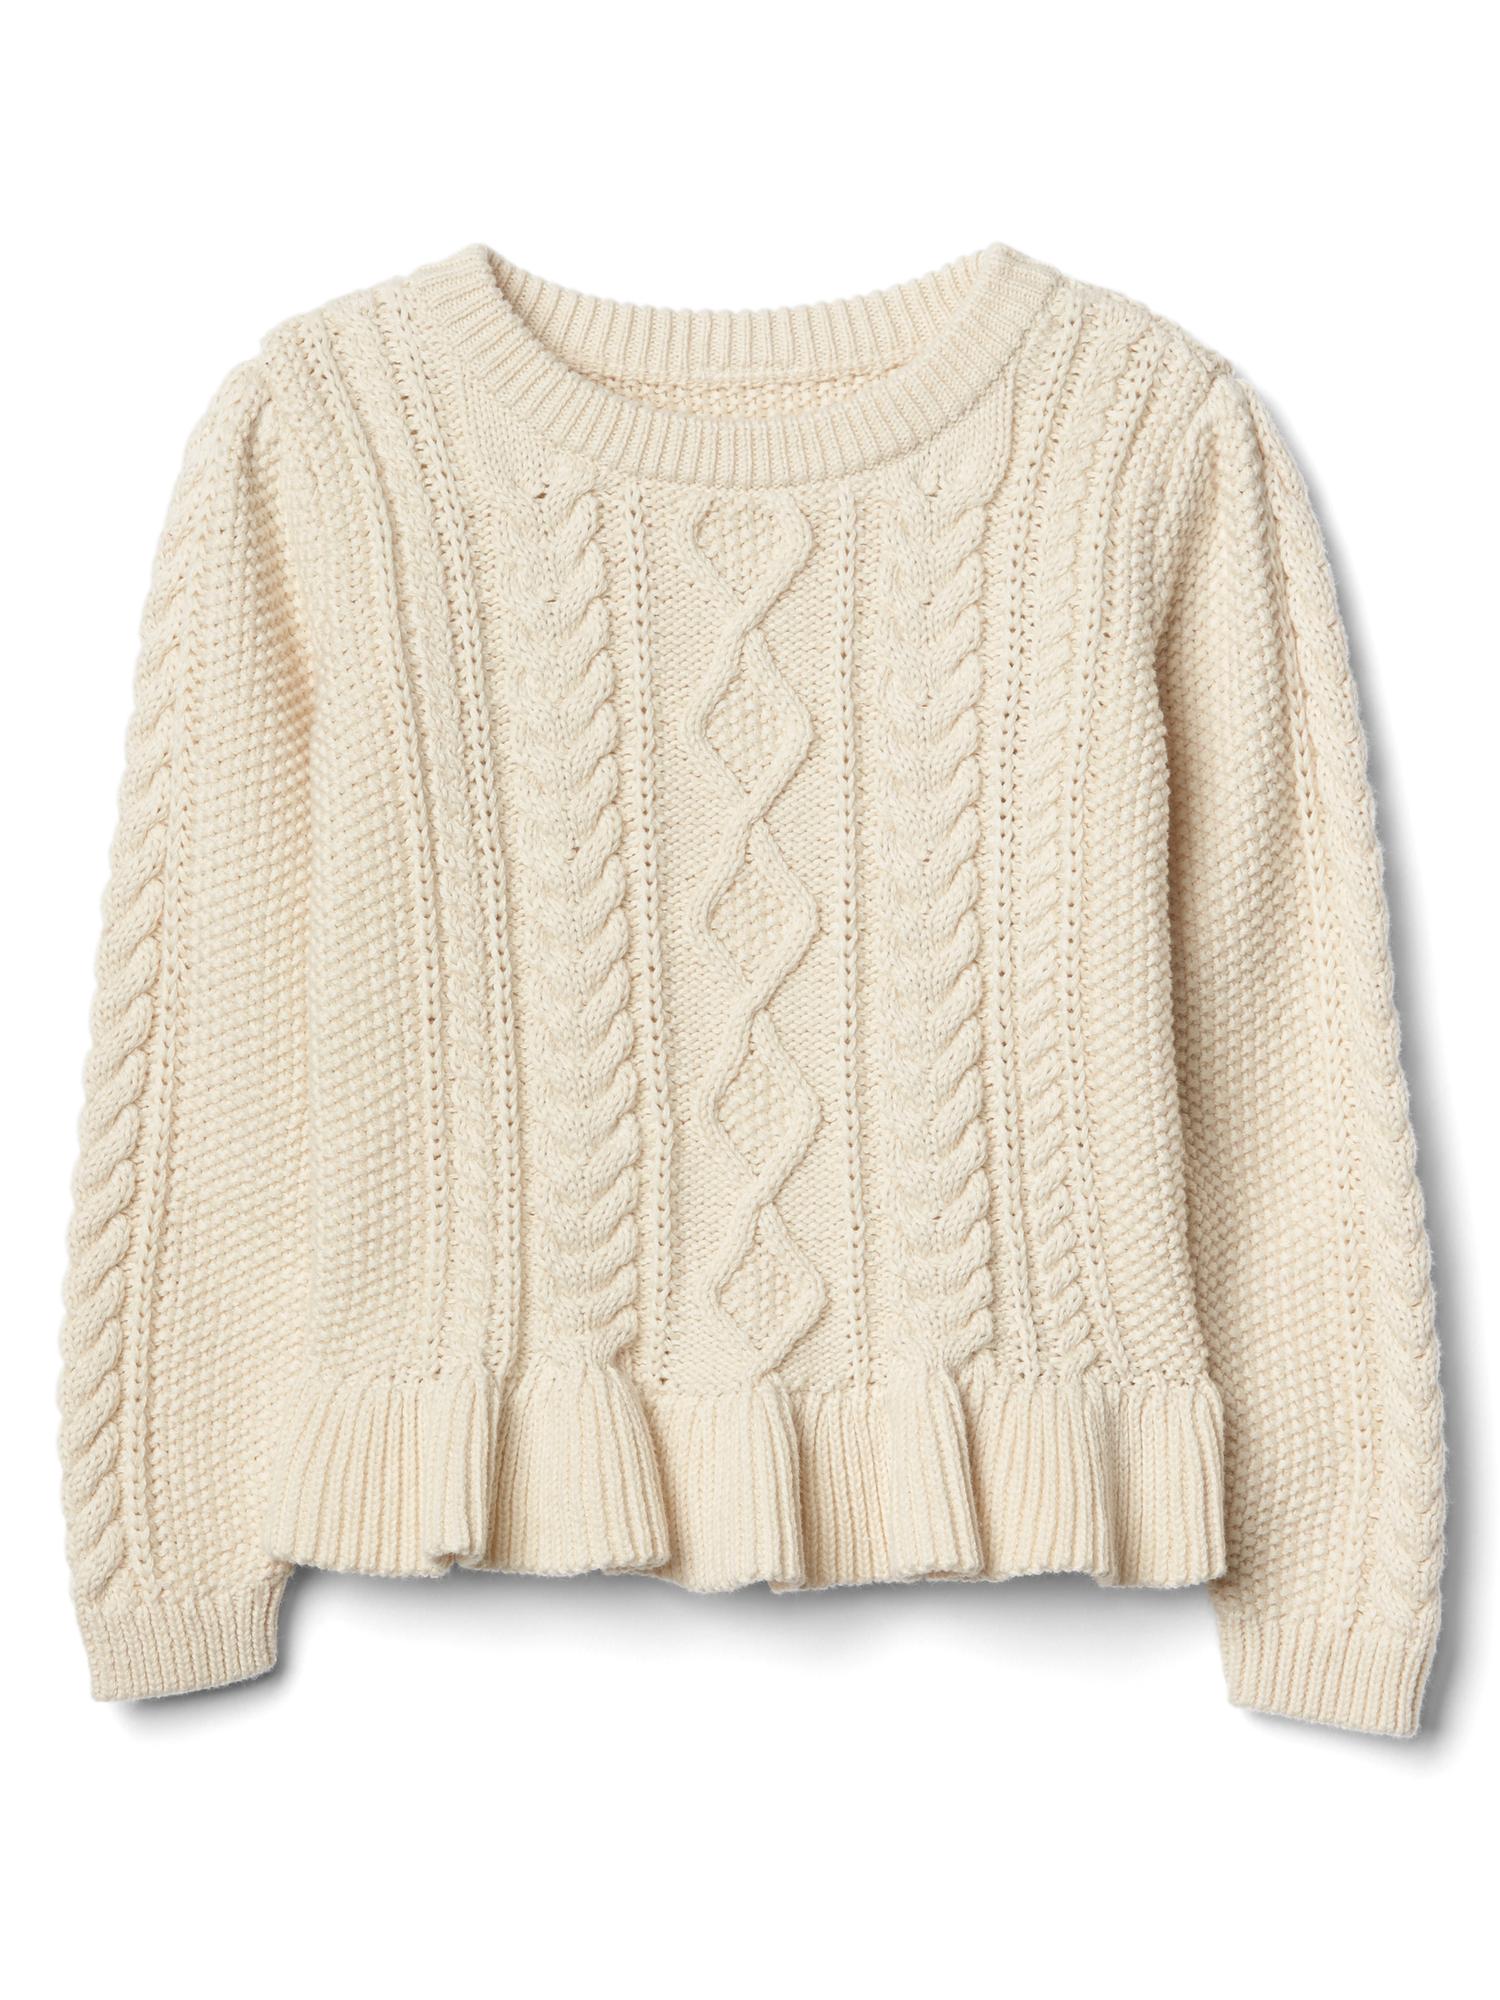 Cable-knit peplum sweater | Gap